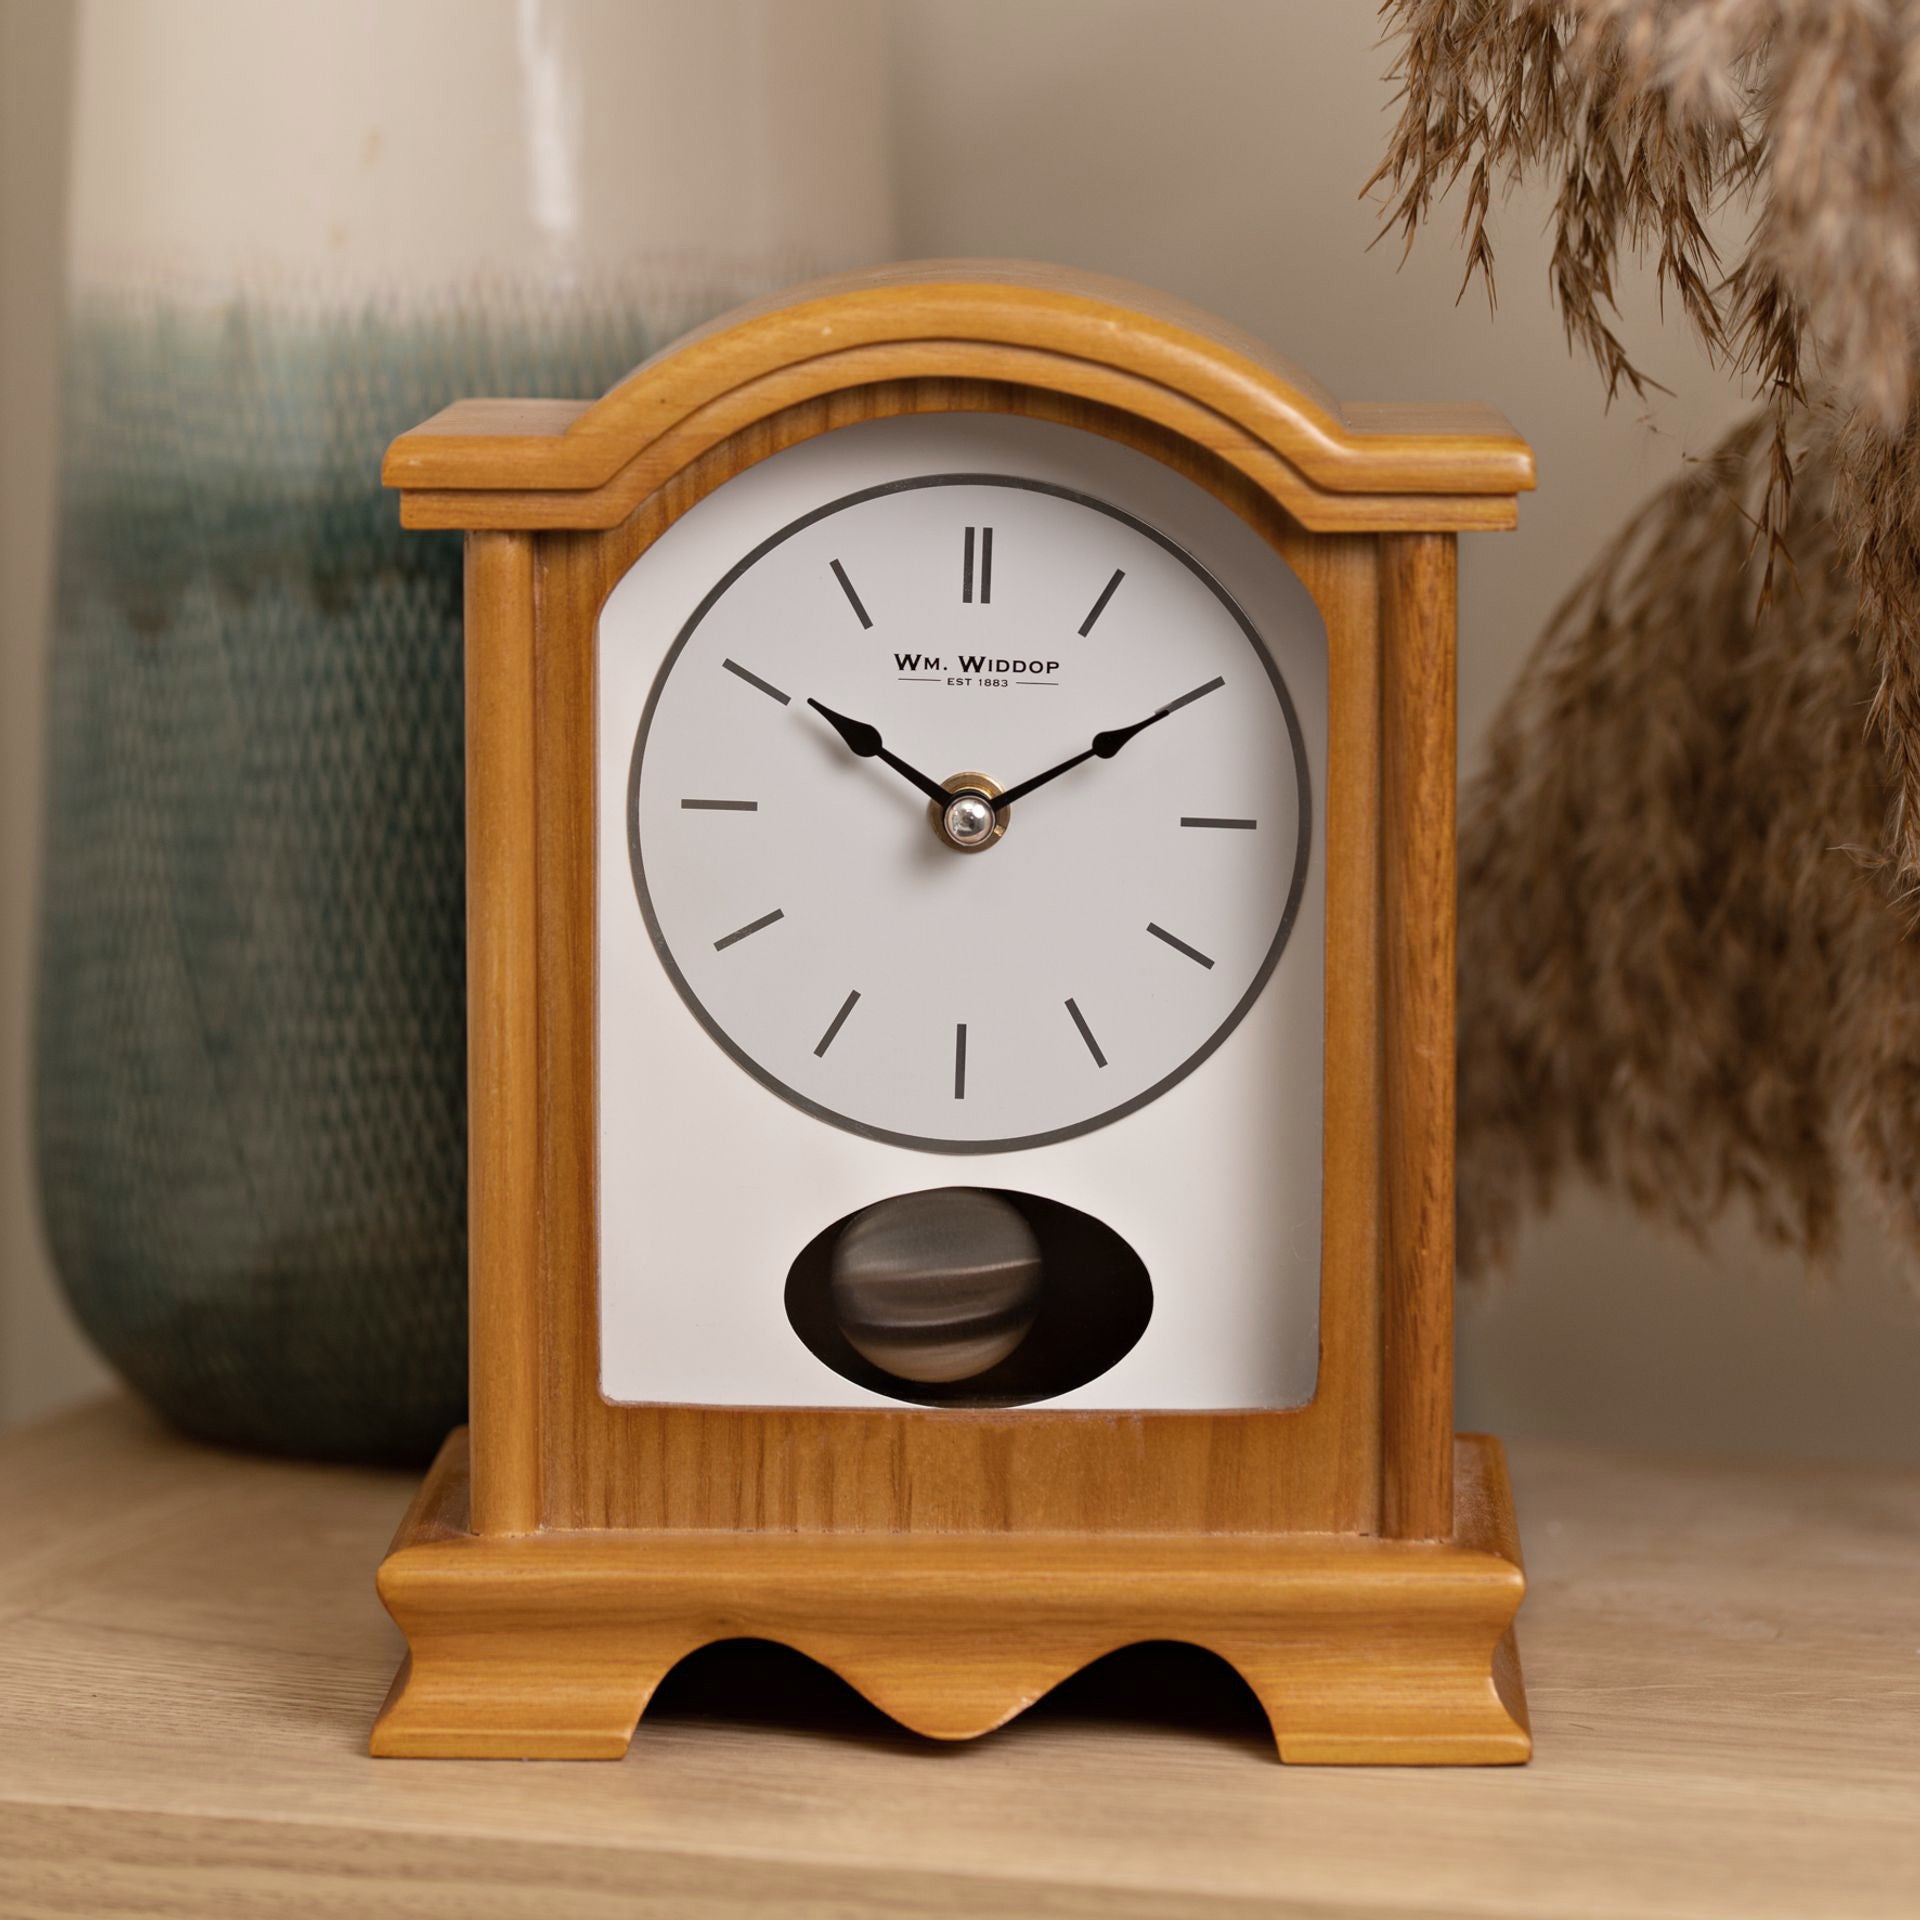 WM. Widdop Broken Arch Oak Finish Wooden Mantel Clock with Pendulum